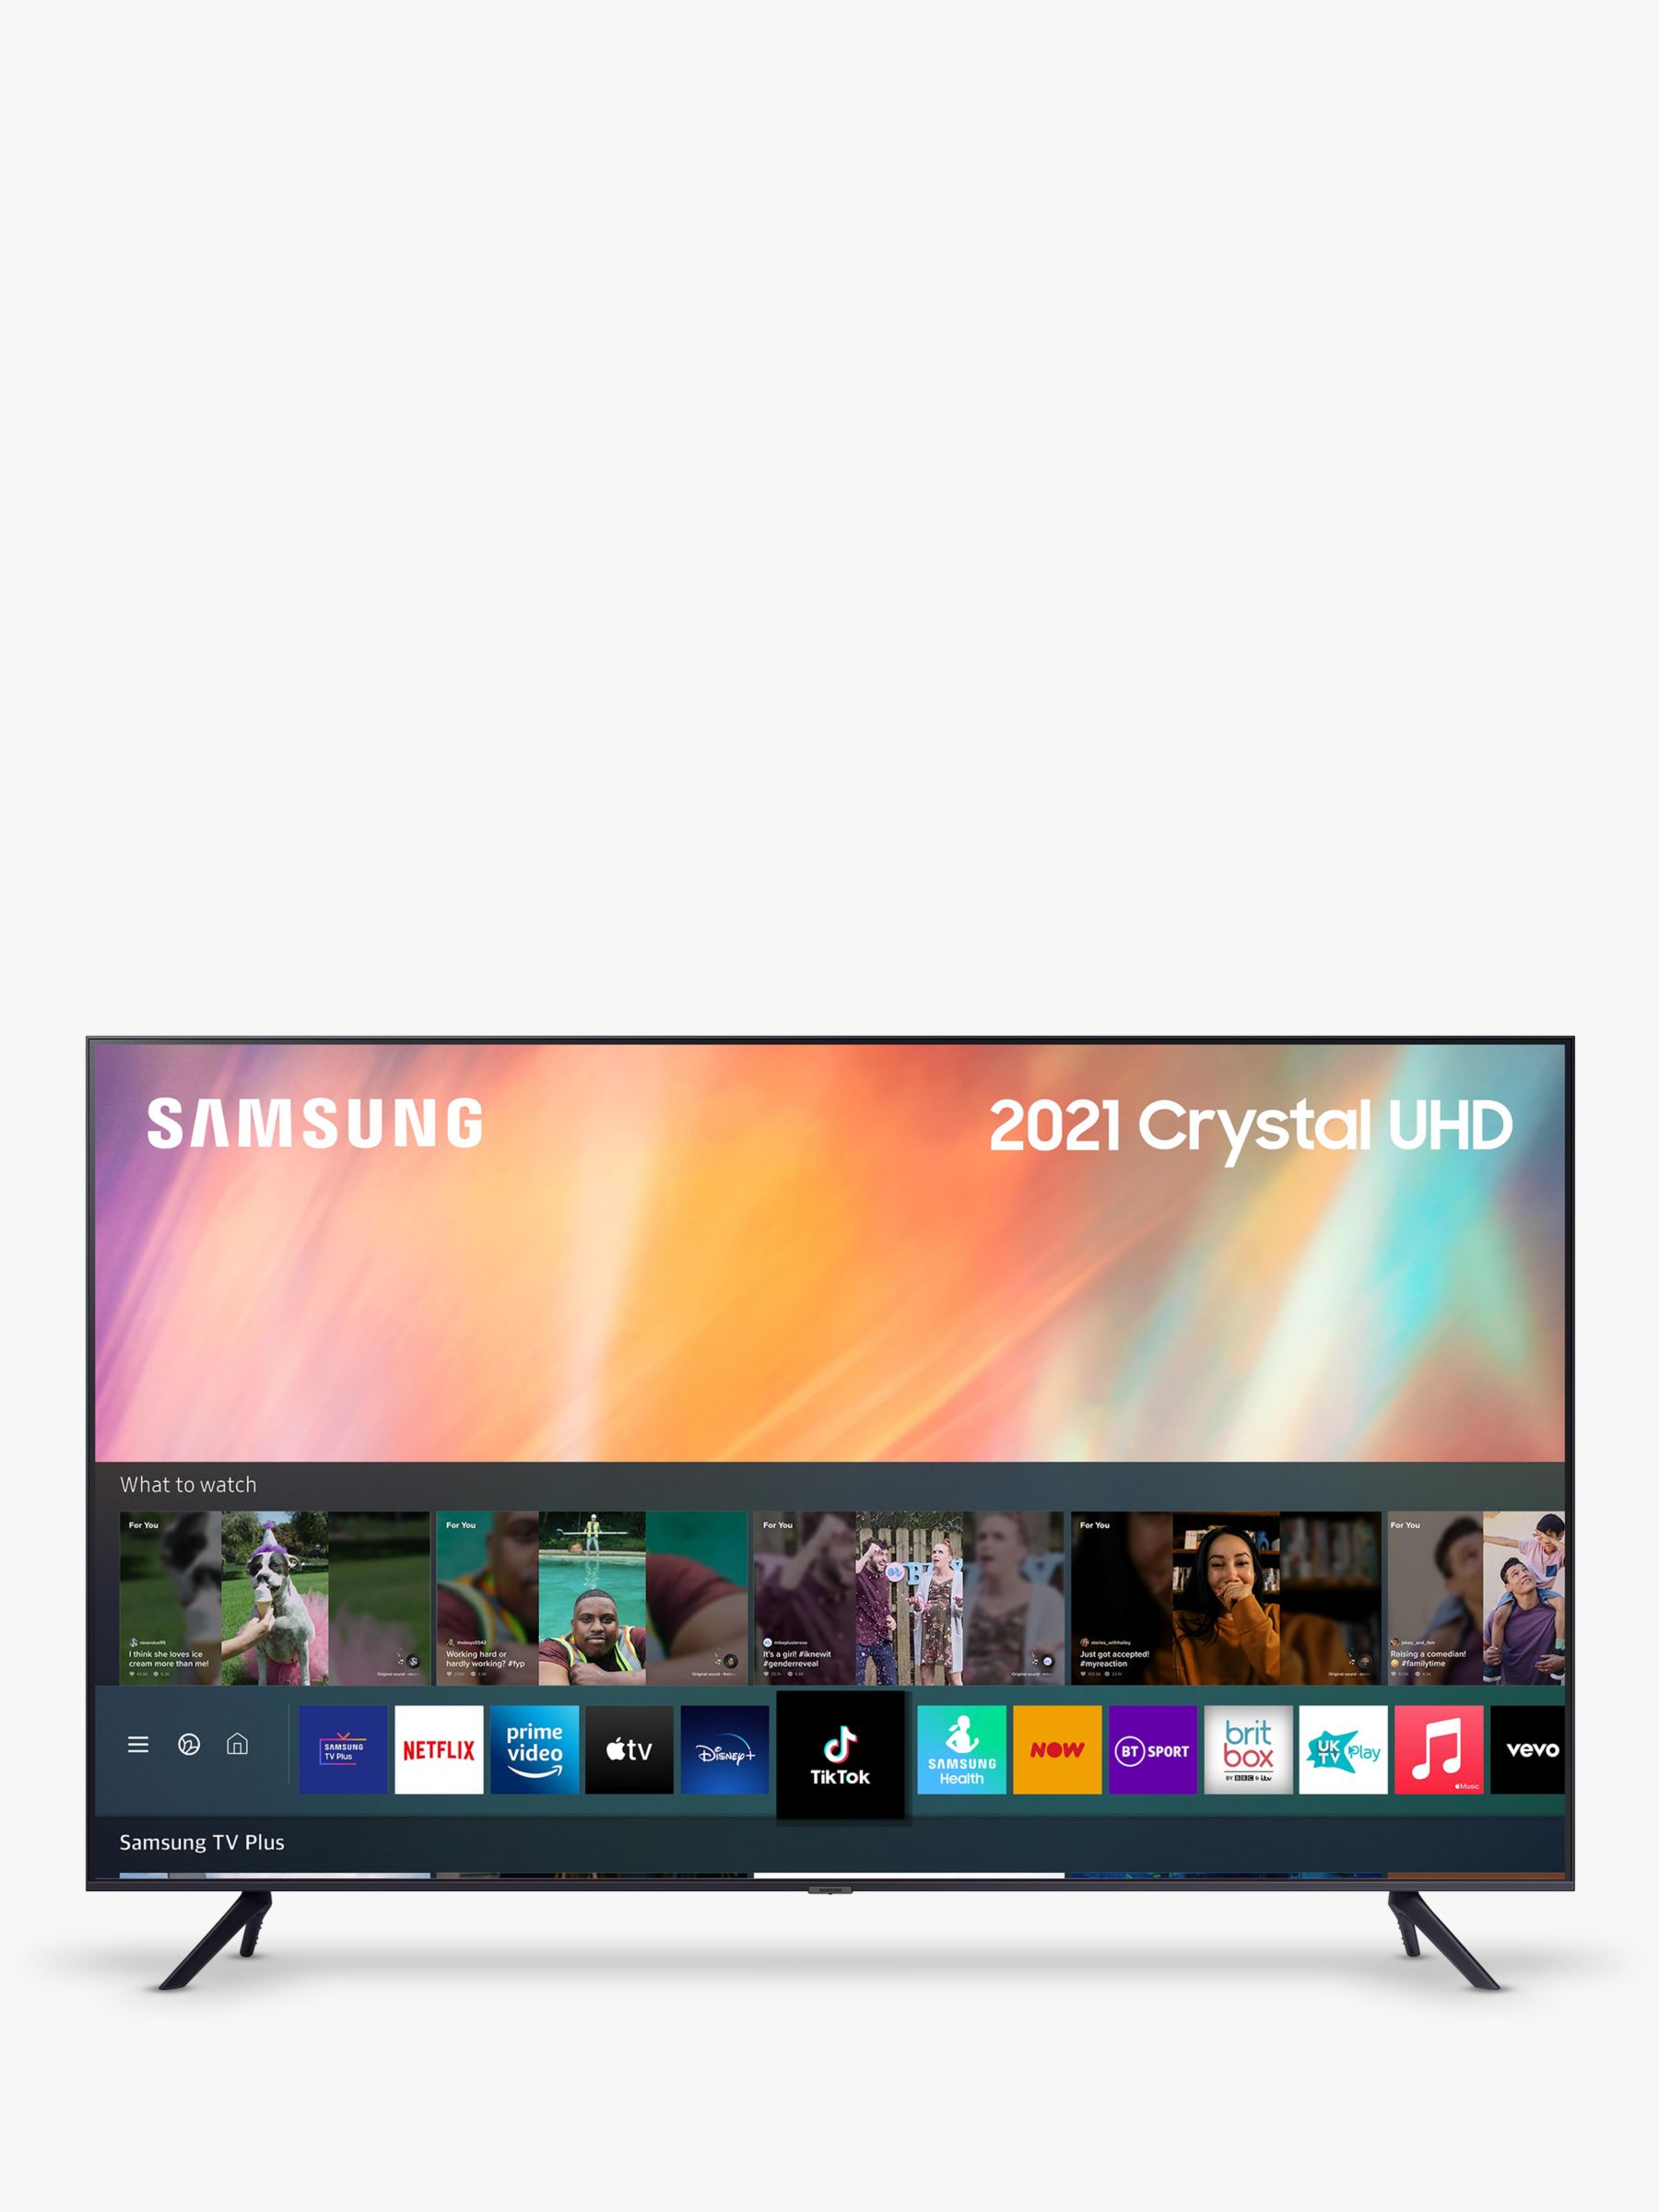 Samsung UE65AU7100 (2021) HDR 4K Ultra HD Smart TV, 65 inch with TVPlus, Black